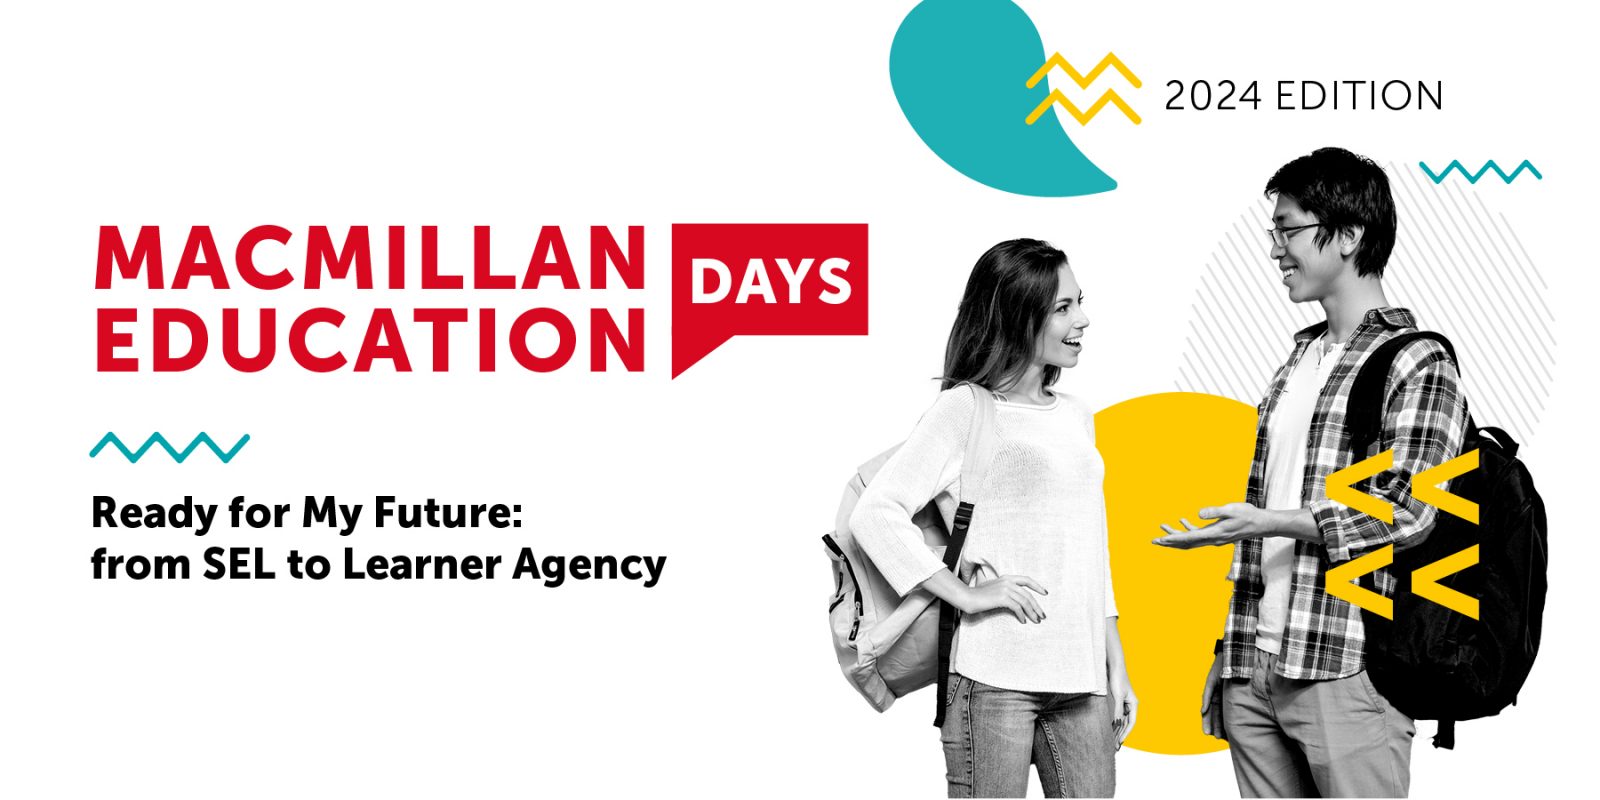 Macmillan Education Days 2024